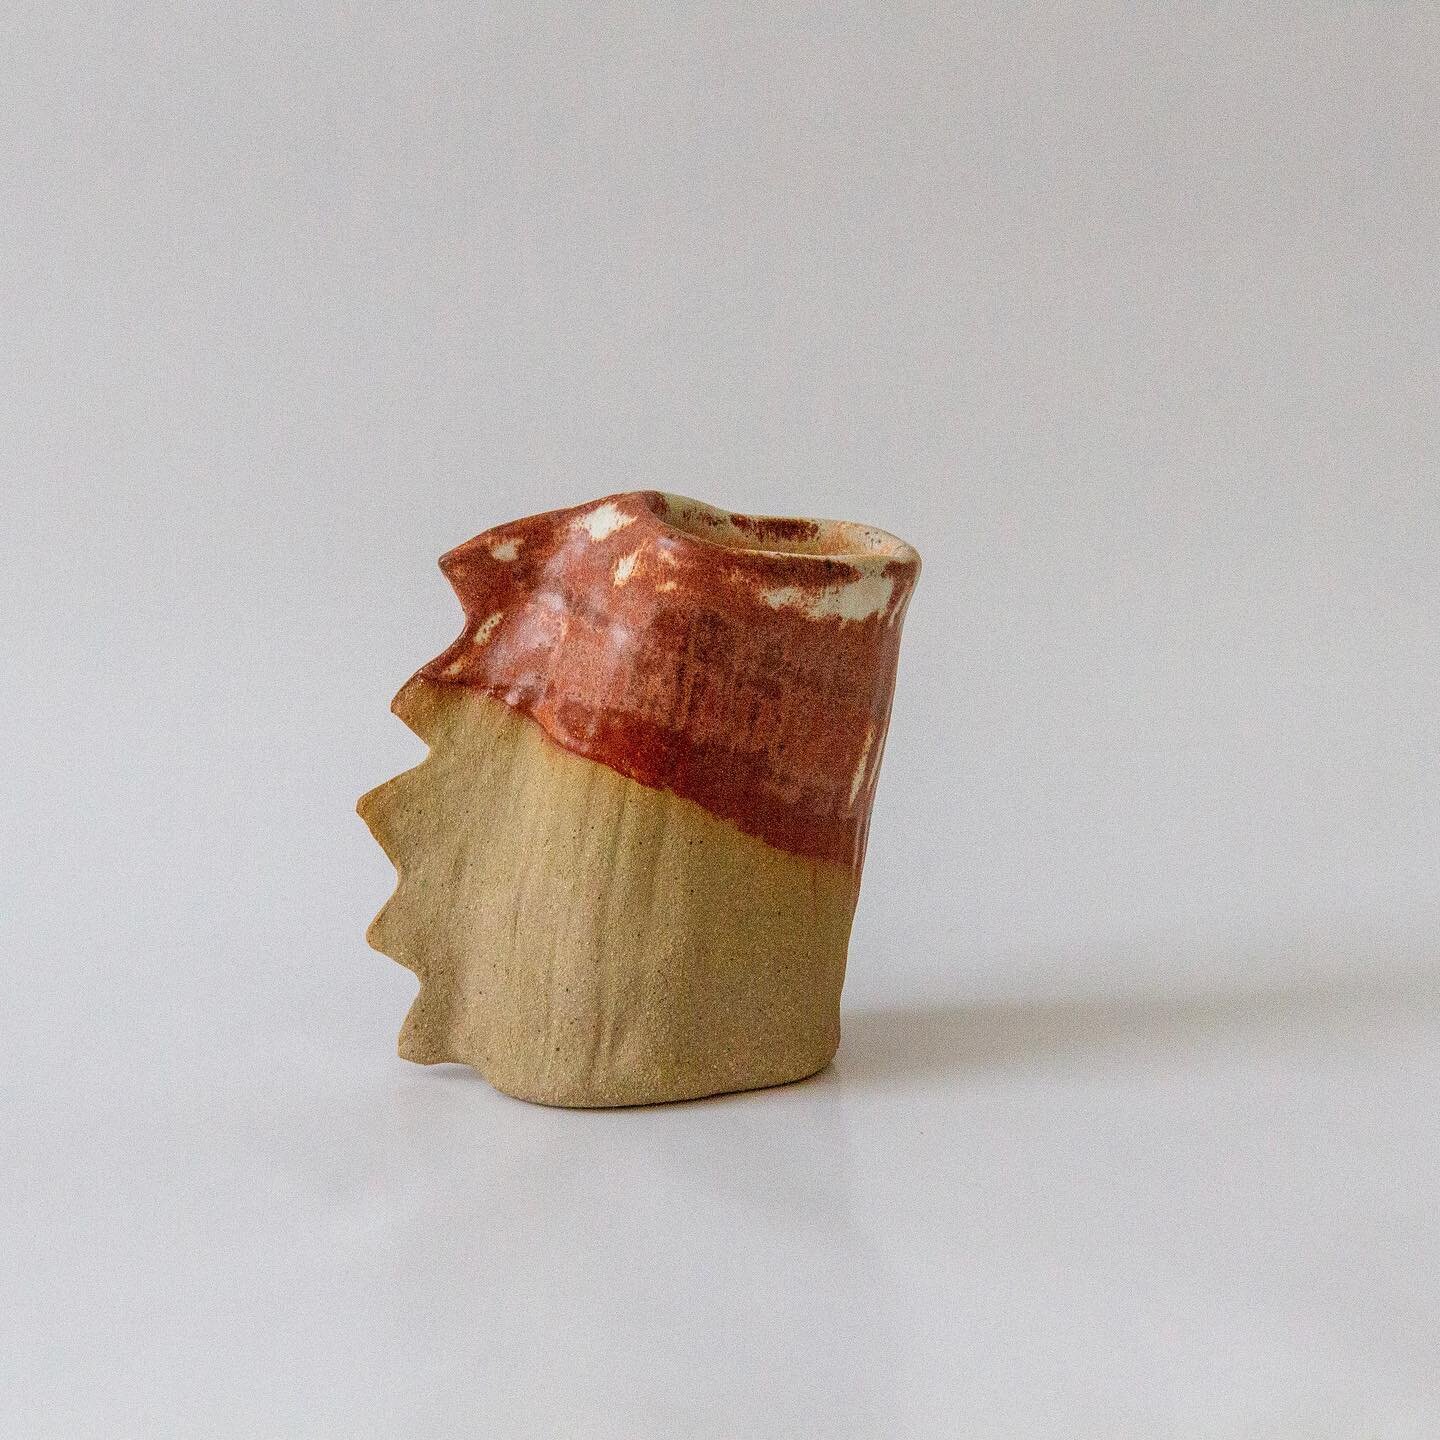 Serrated ochre vase
2021
.
.
.
Hand formed, one off in buff clay with glaze. 
#clay&nbsp;#cremerging&nbsp;#australianartist&nbsp;#stoneware&nbsp;#1000vases&nbsp;#emergingartist&nbsp;#emergingaustralianartist&nbsp;#keramik&nbsp;#handbuiltceramics&nbsp